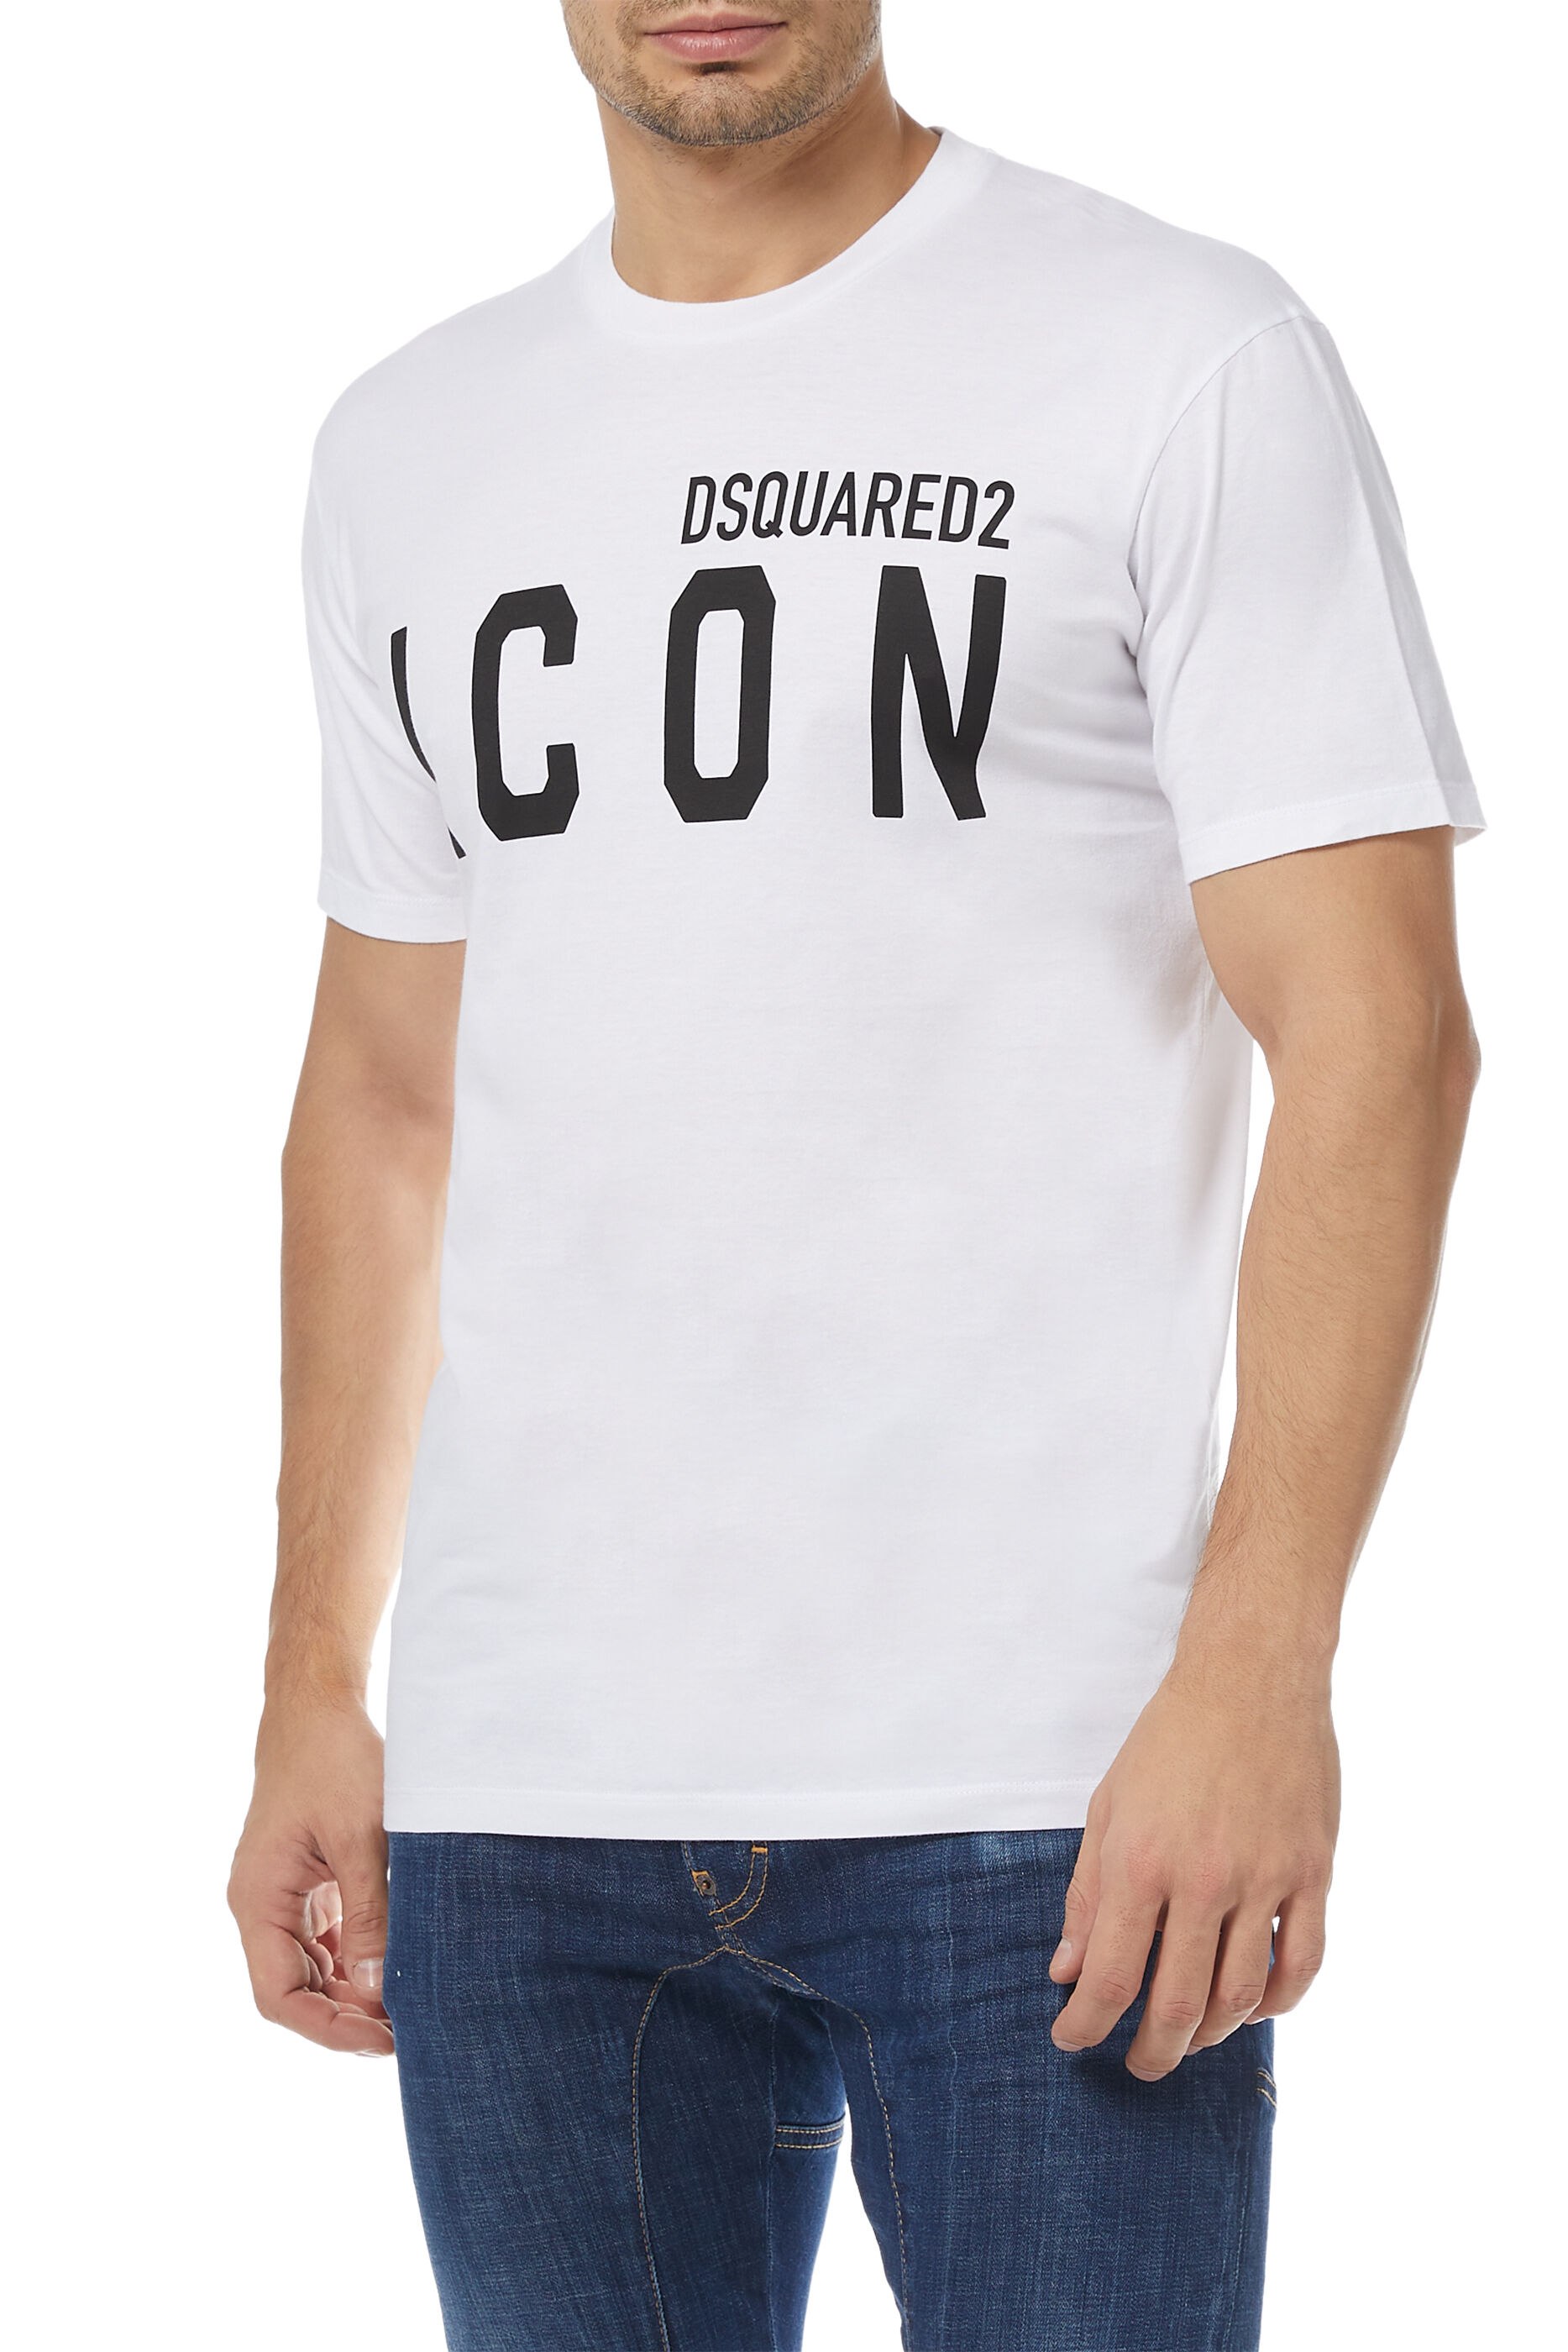 DSquared² Cotton Logo Print T-shirt in White for Men Mens T-shirts DSquared² T-shirts Save 50% 